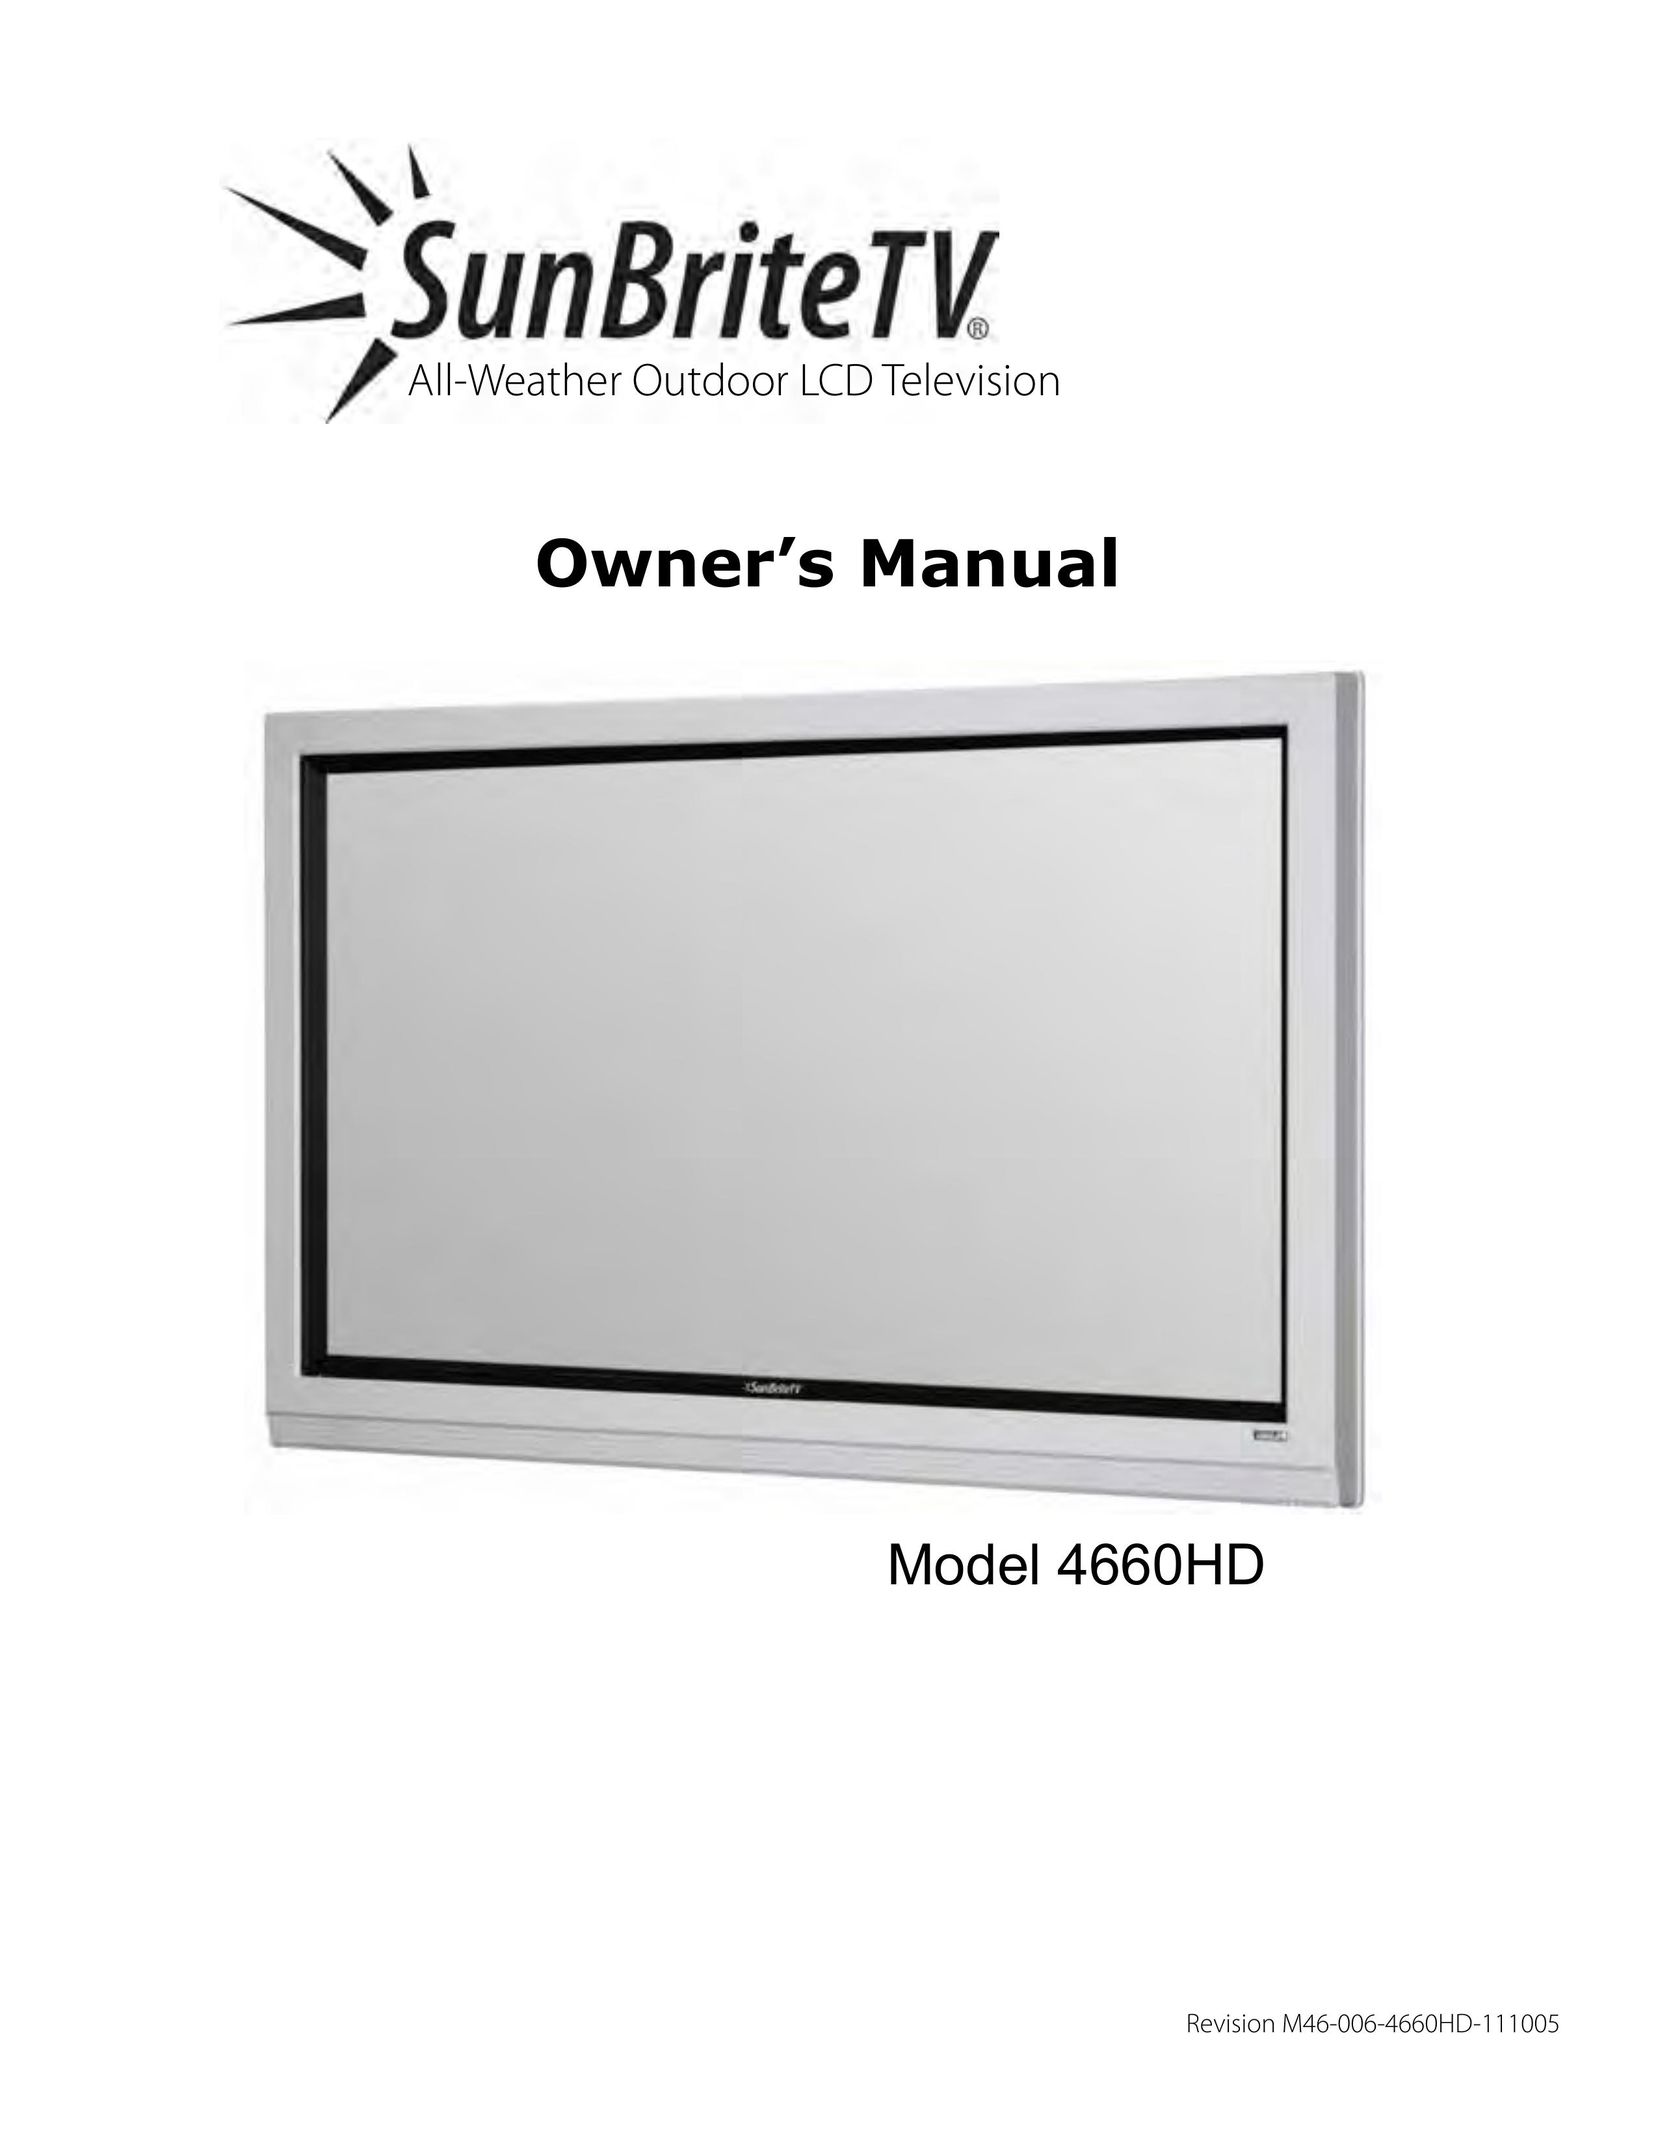 SunBriteTV 46-006-4660HD-111005 Flat Panel Television User Manual